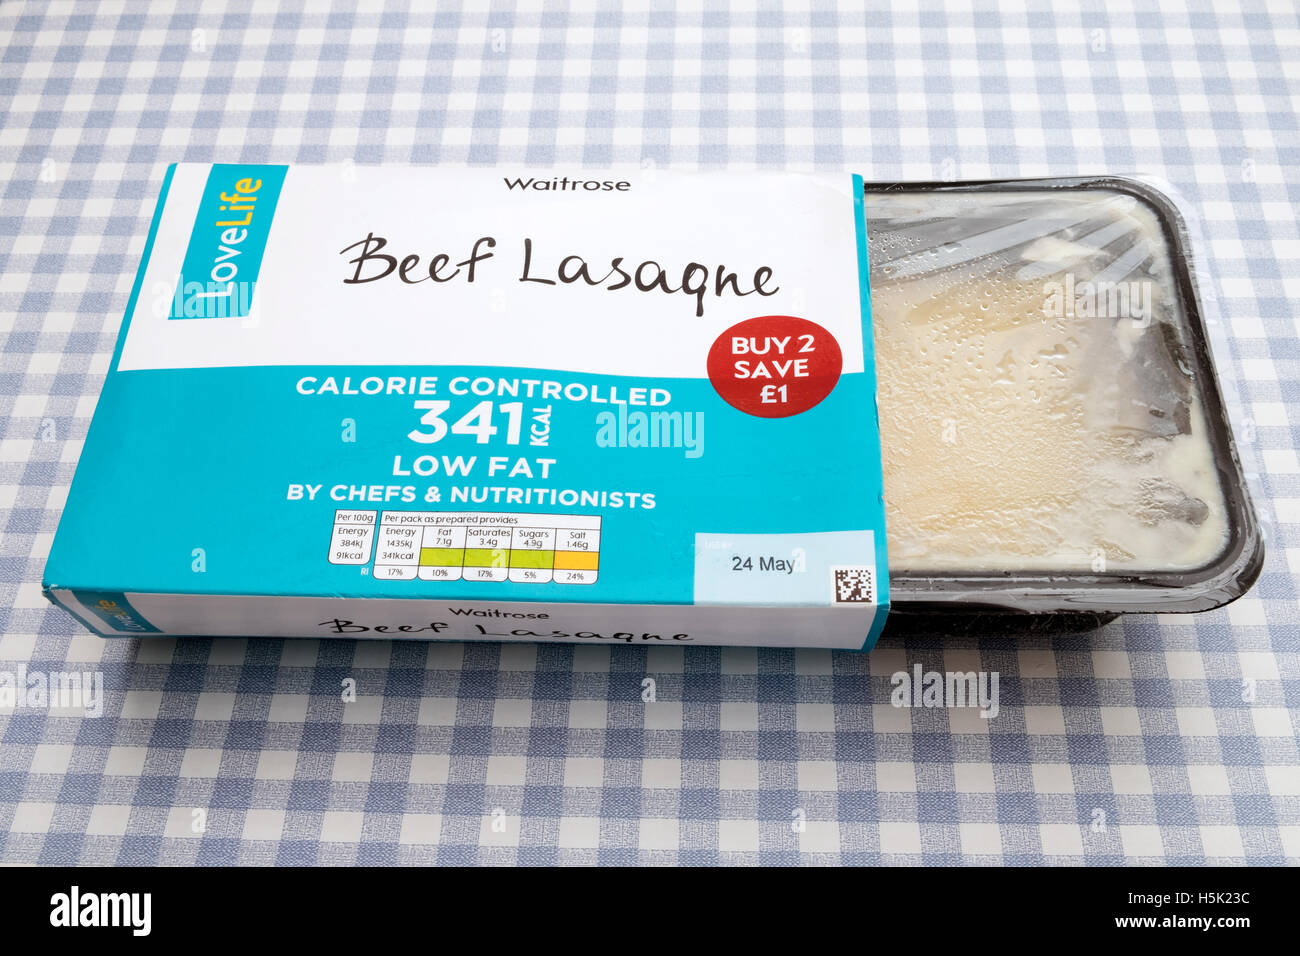 Waitrose Love Life beef Lasagne ready meal Stock Photo